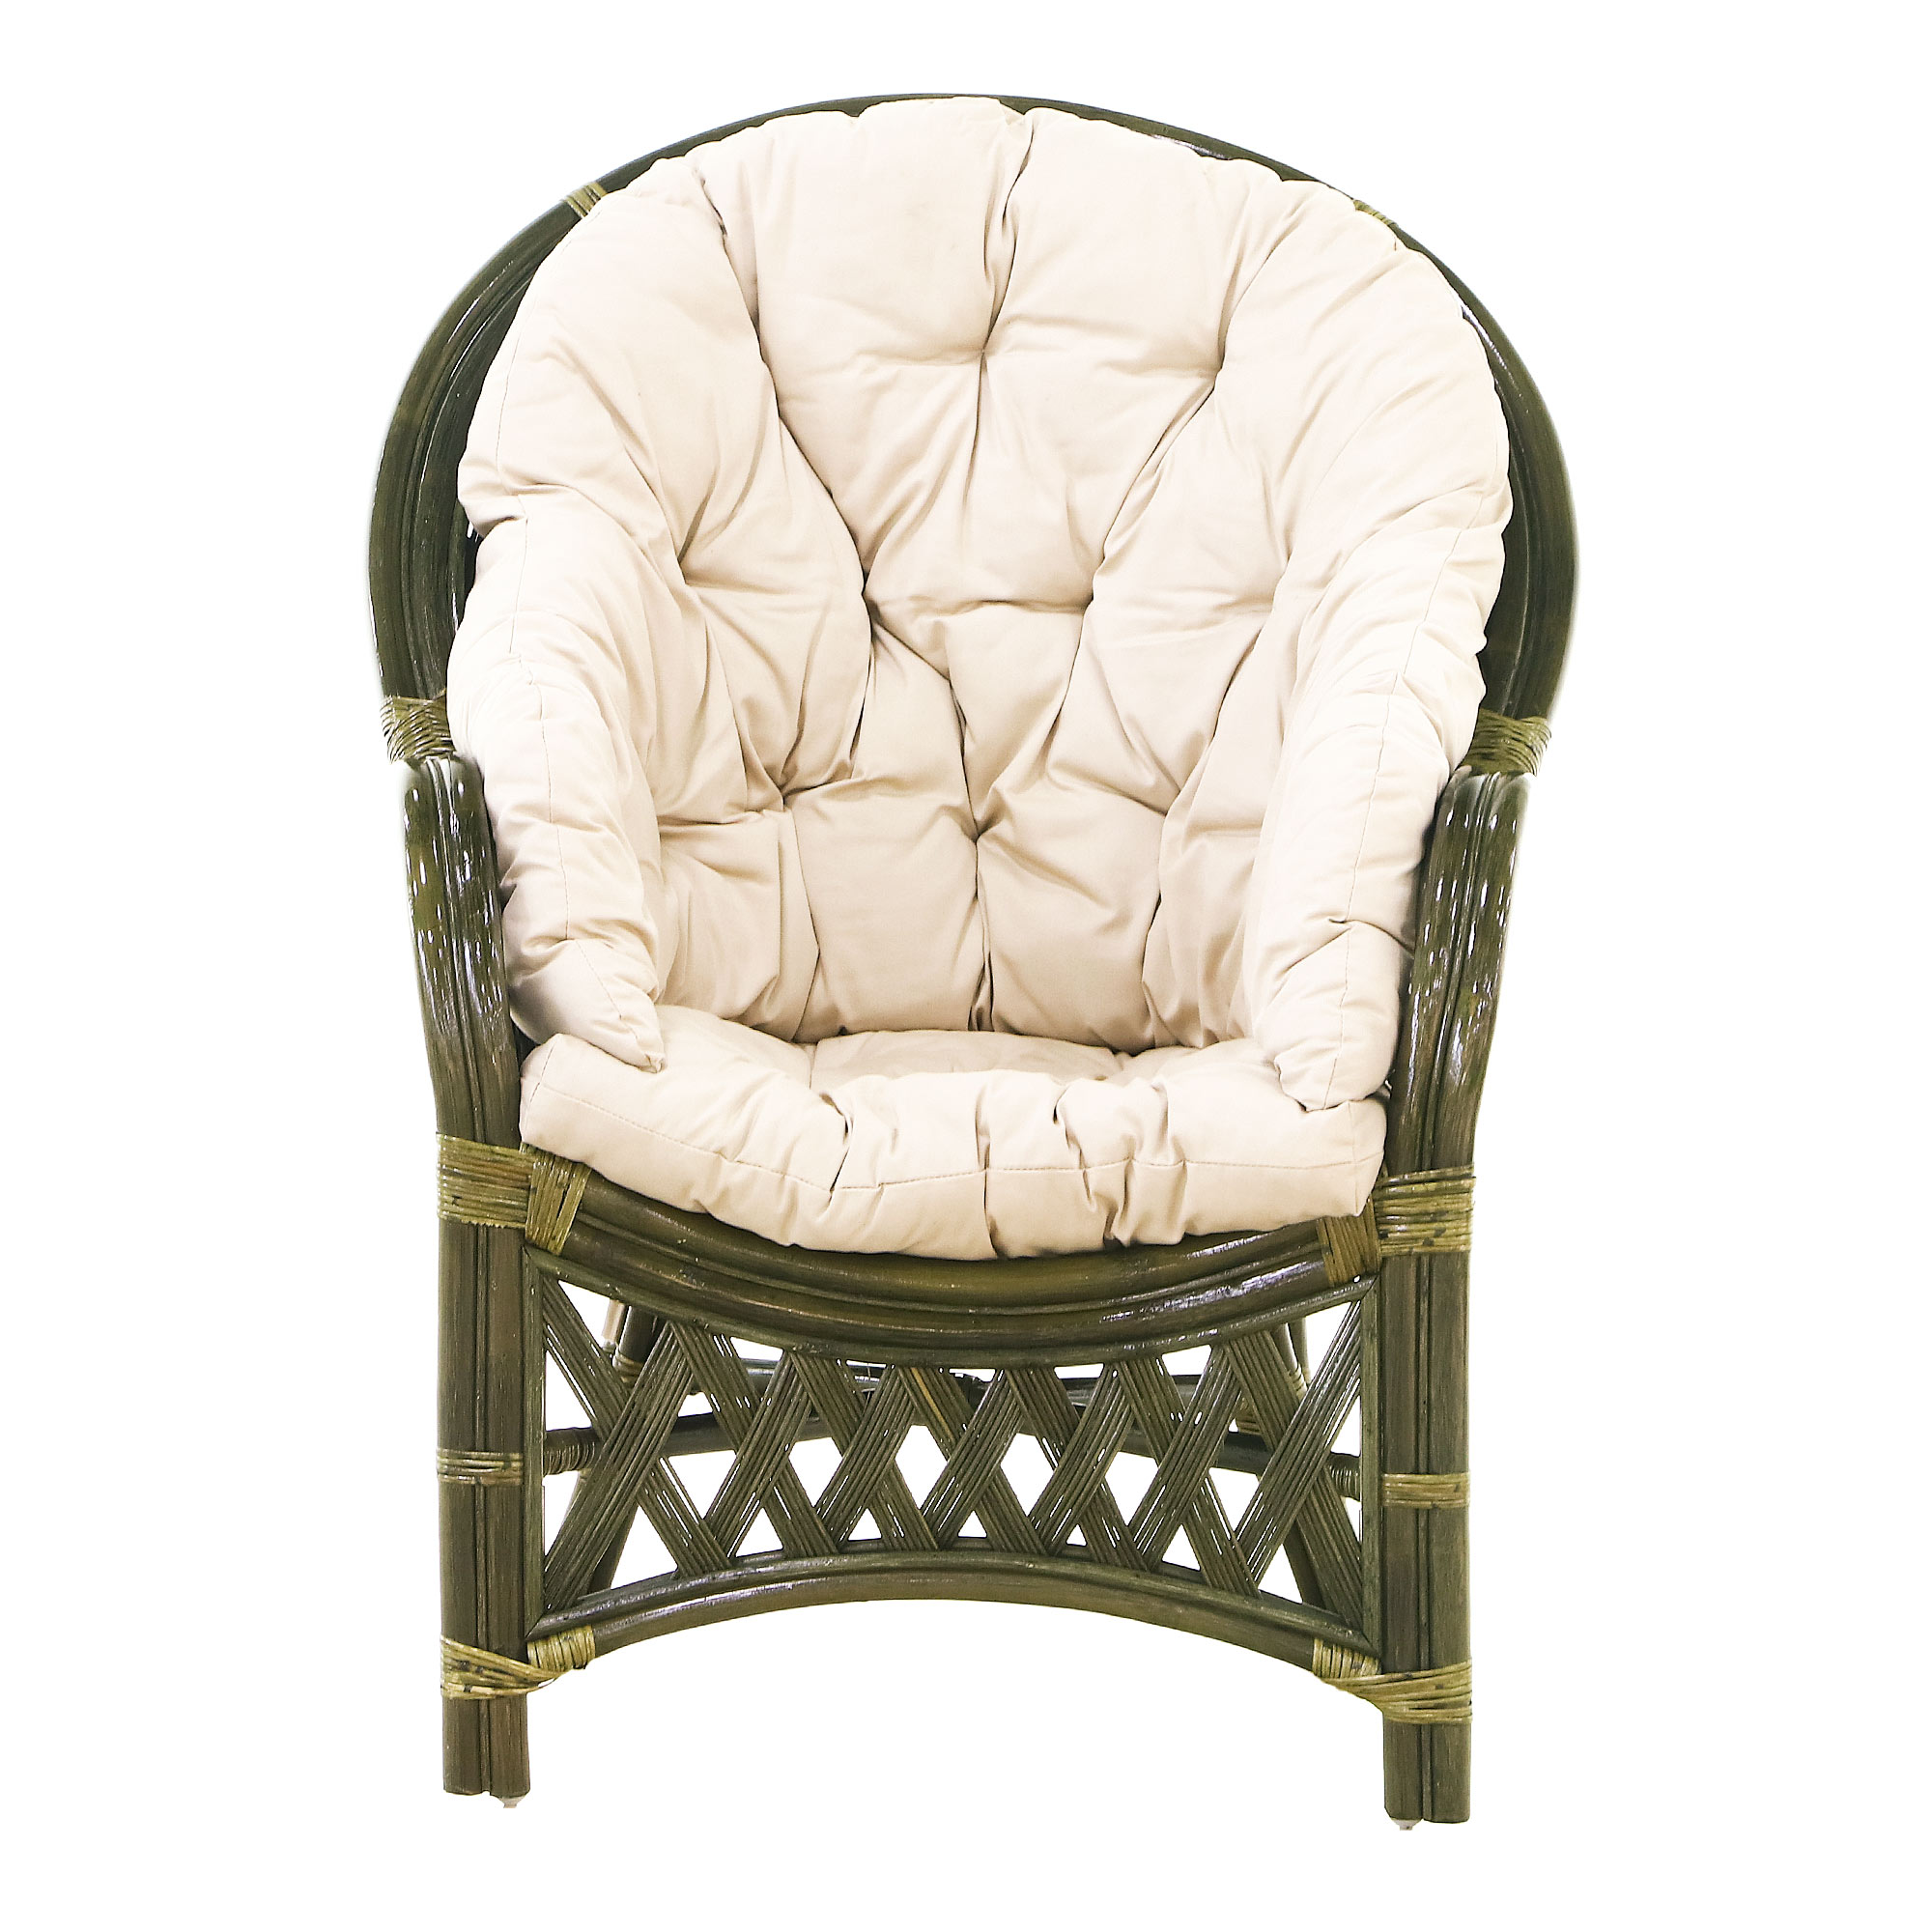 Комплект мебели Rattan grand amalfi olive: диван, стол, 2 кресла, цвет оливковый - фото 4